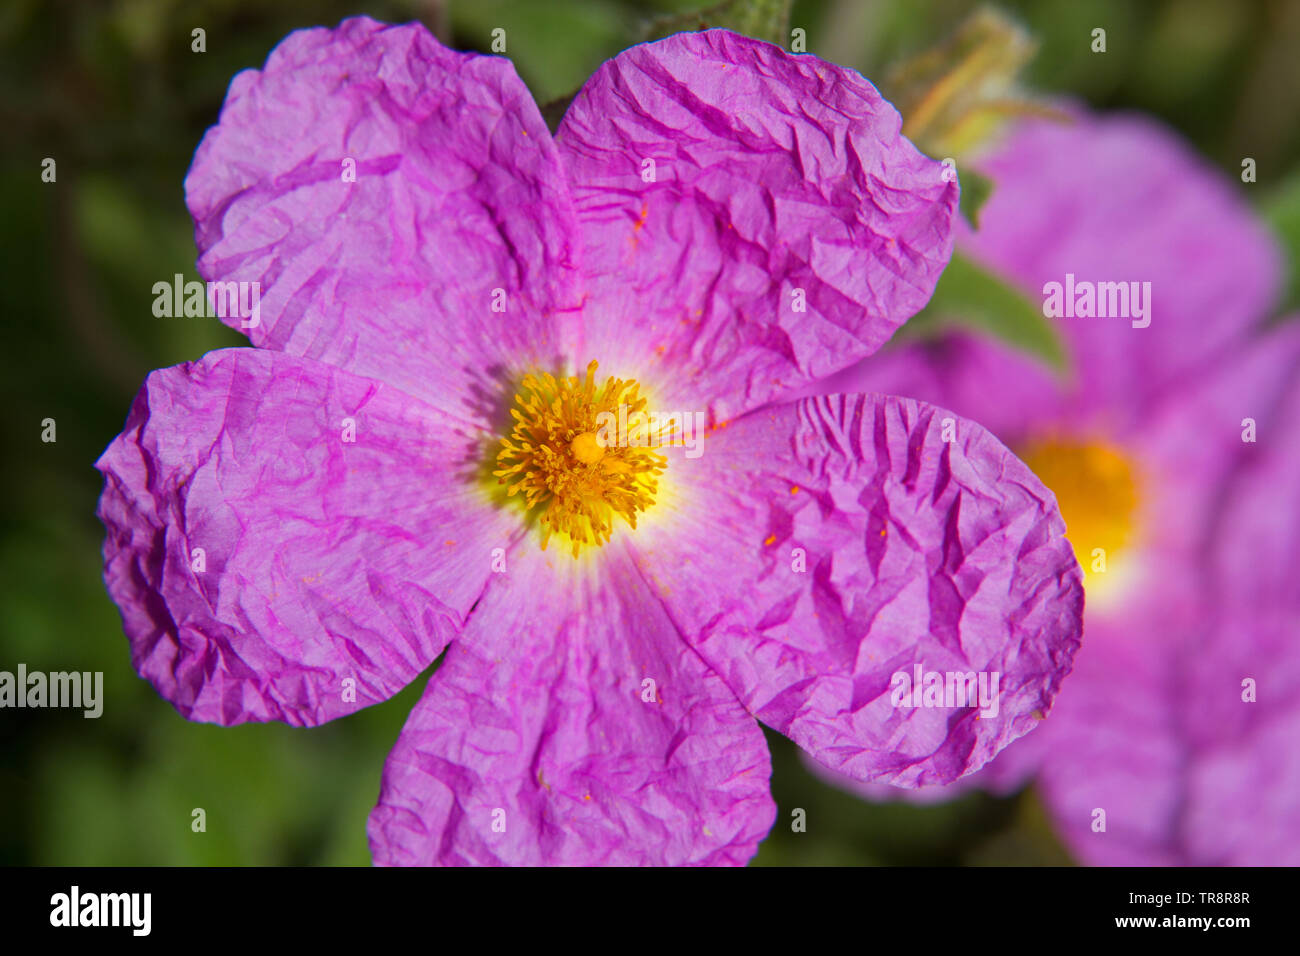 Close-up of the purple, wrinkly flower of Cretan Rockrose, Cistus creticus Stock Photo